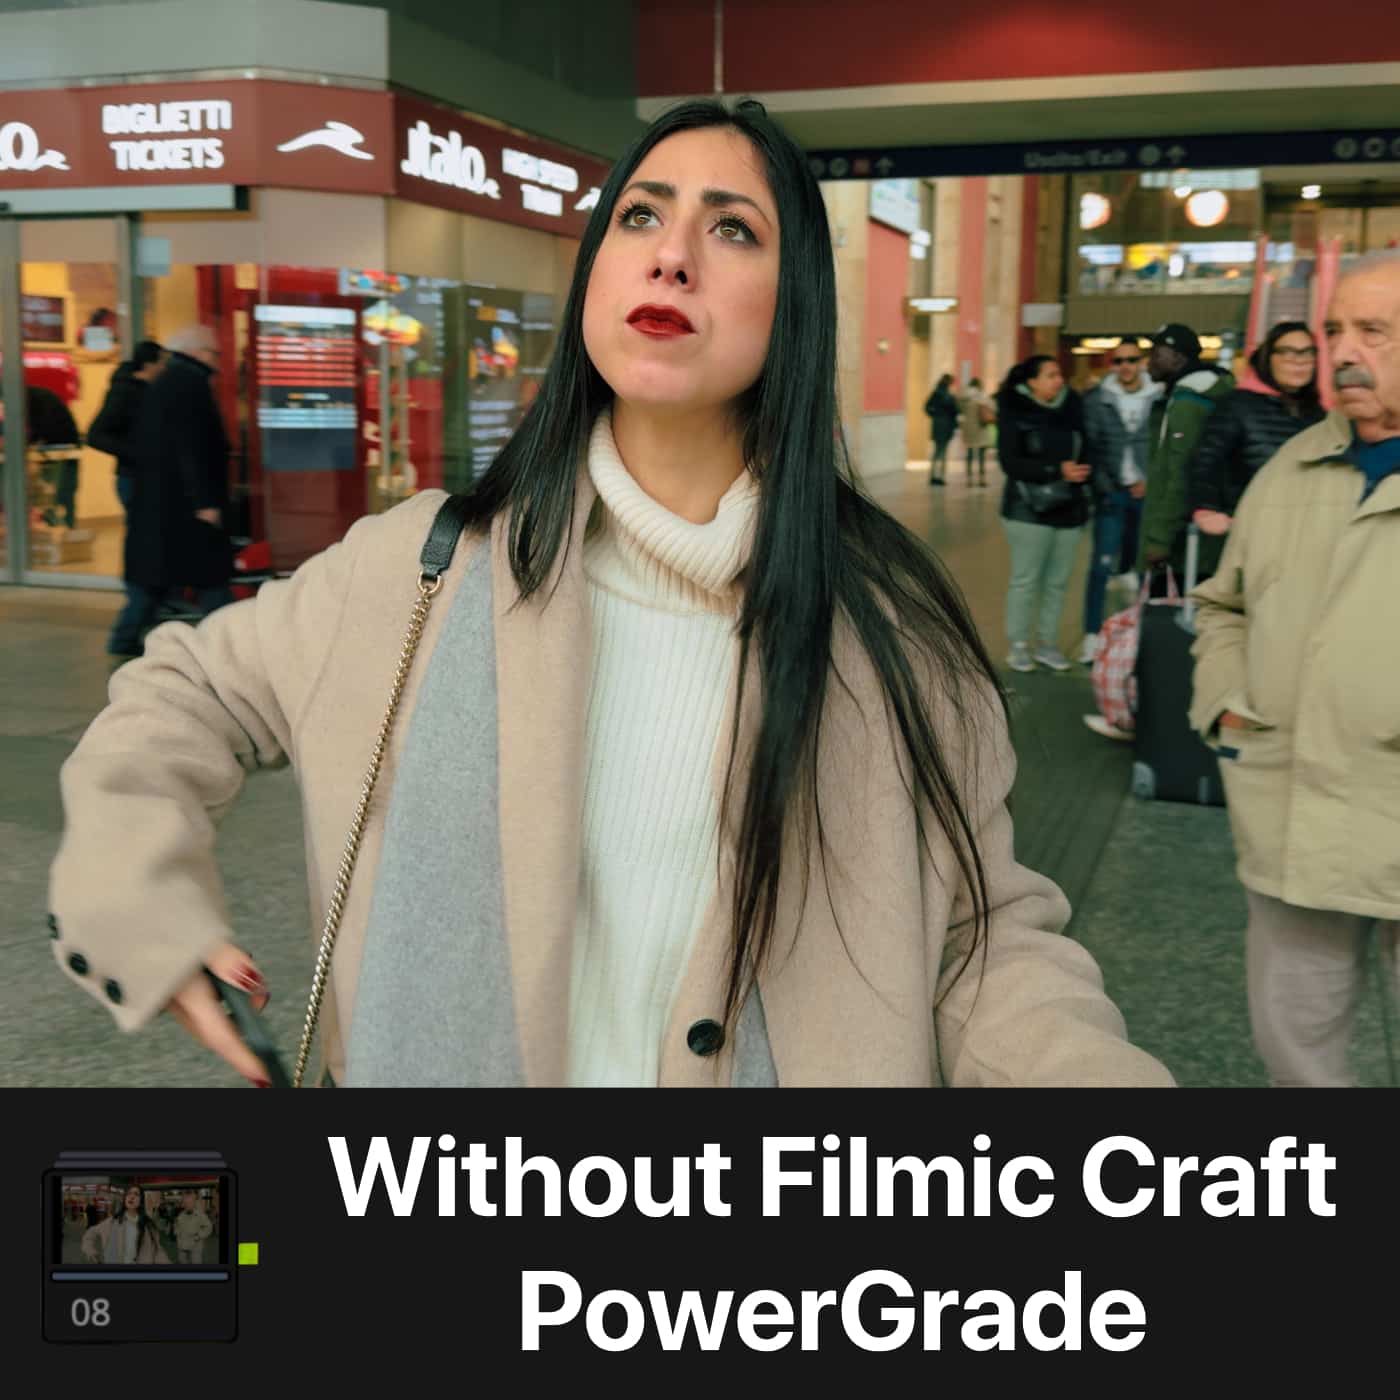 Filmic Craft PowerGrade for iPhone